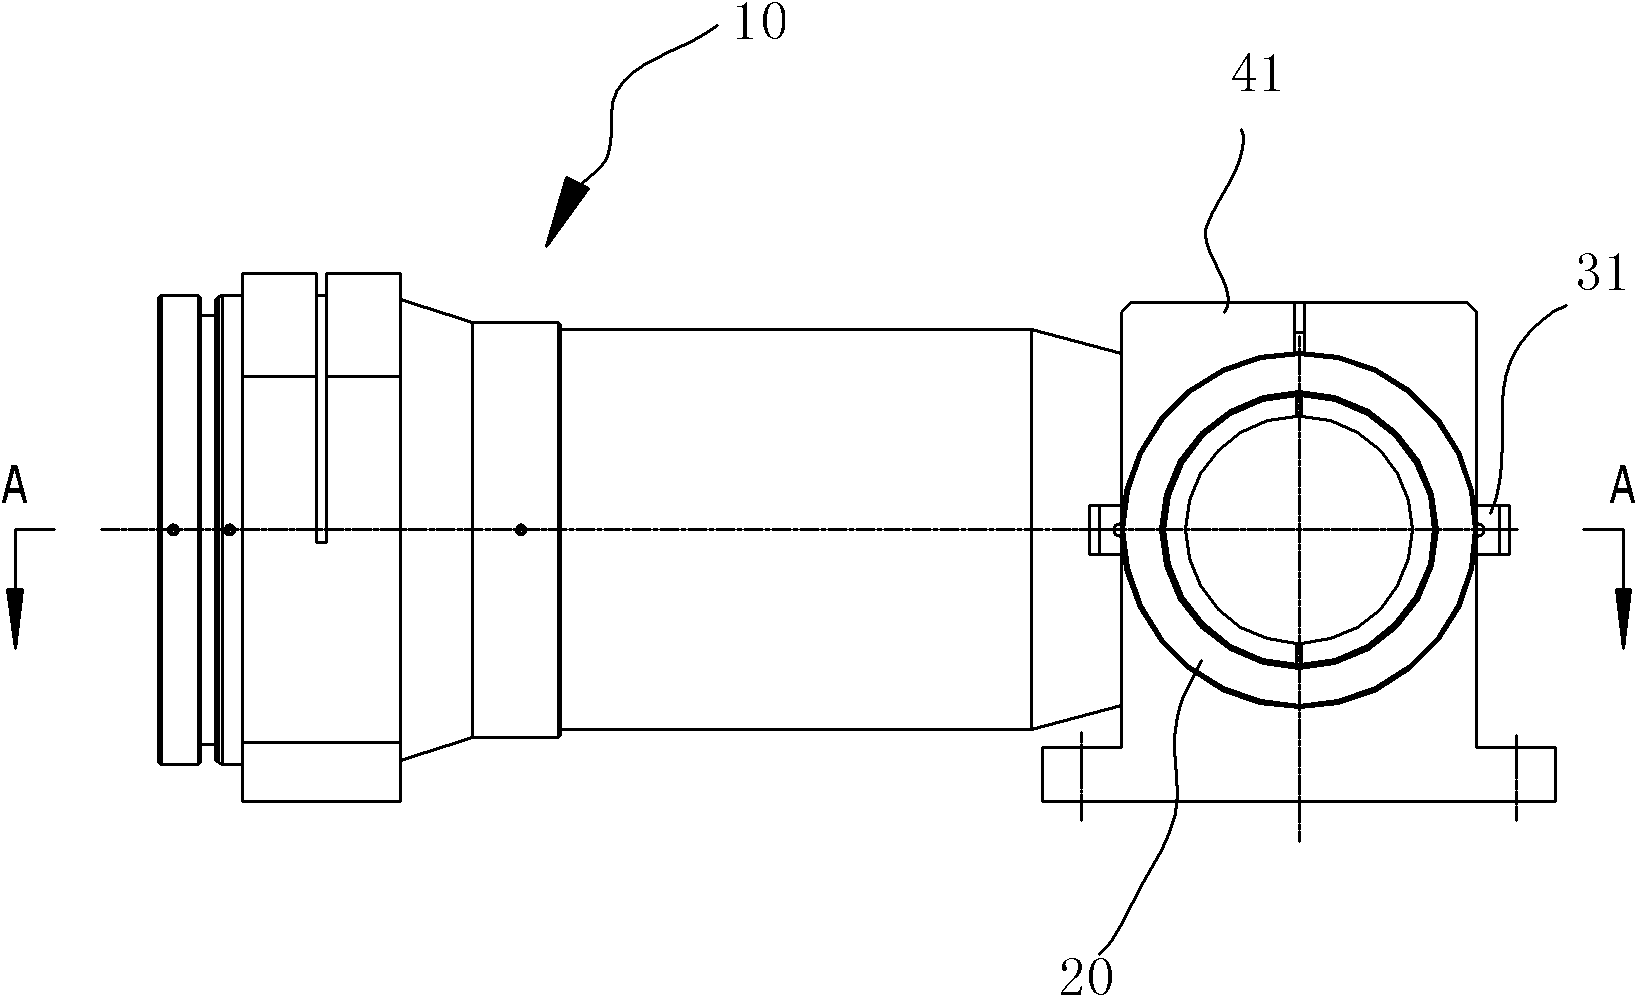 Telecentric imaging lens used in calliper